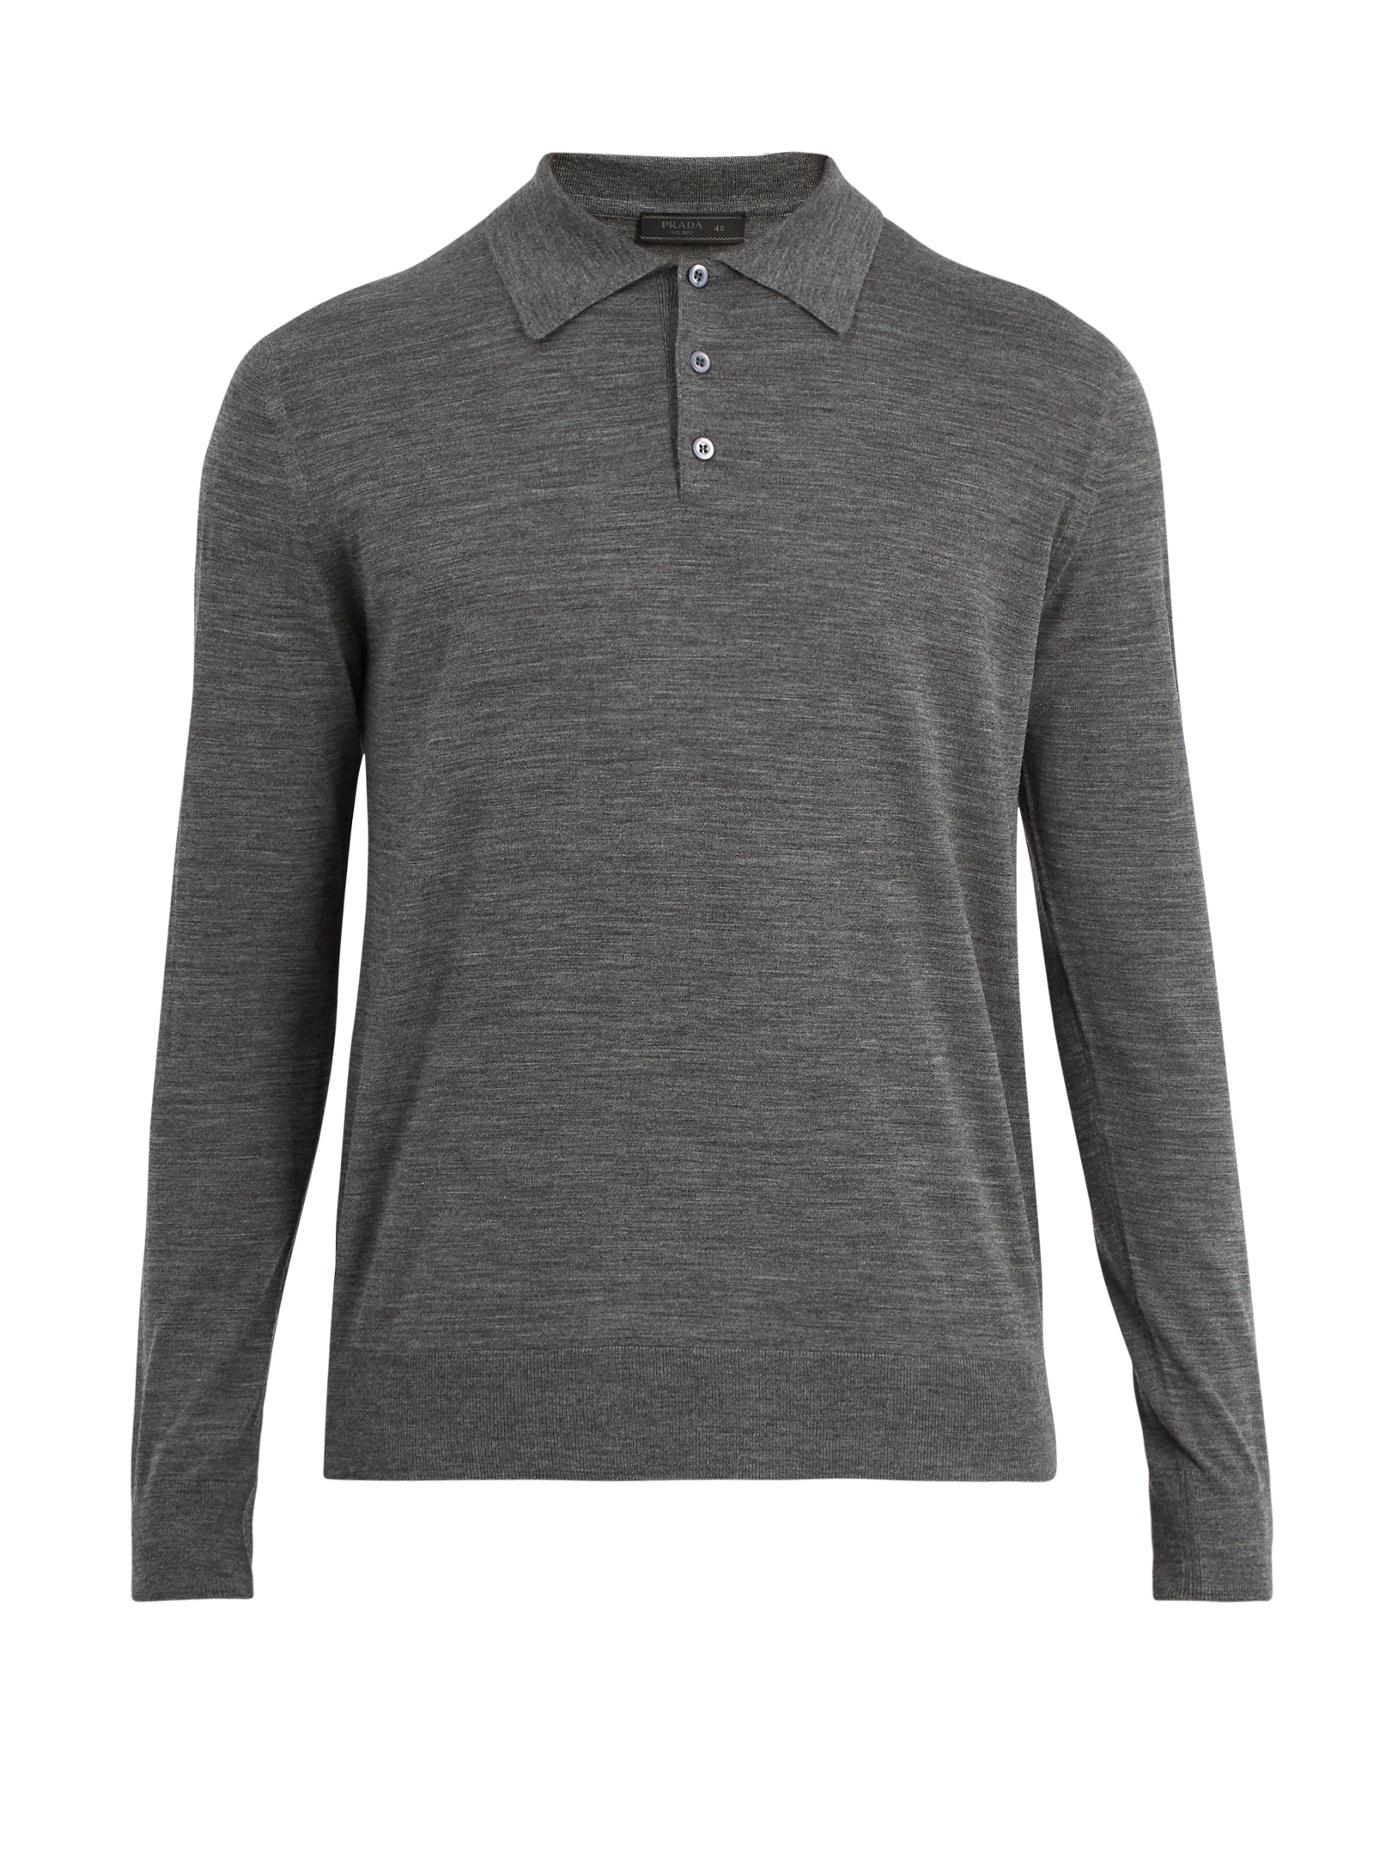 Lyst - Prada Long Sleeve Cotton Polo Shirt in Gray for Men